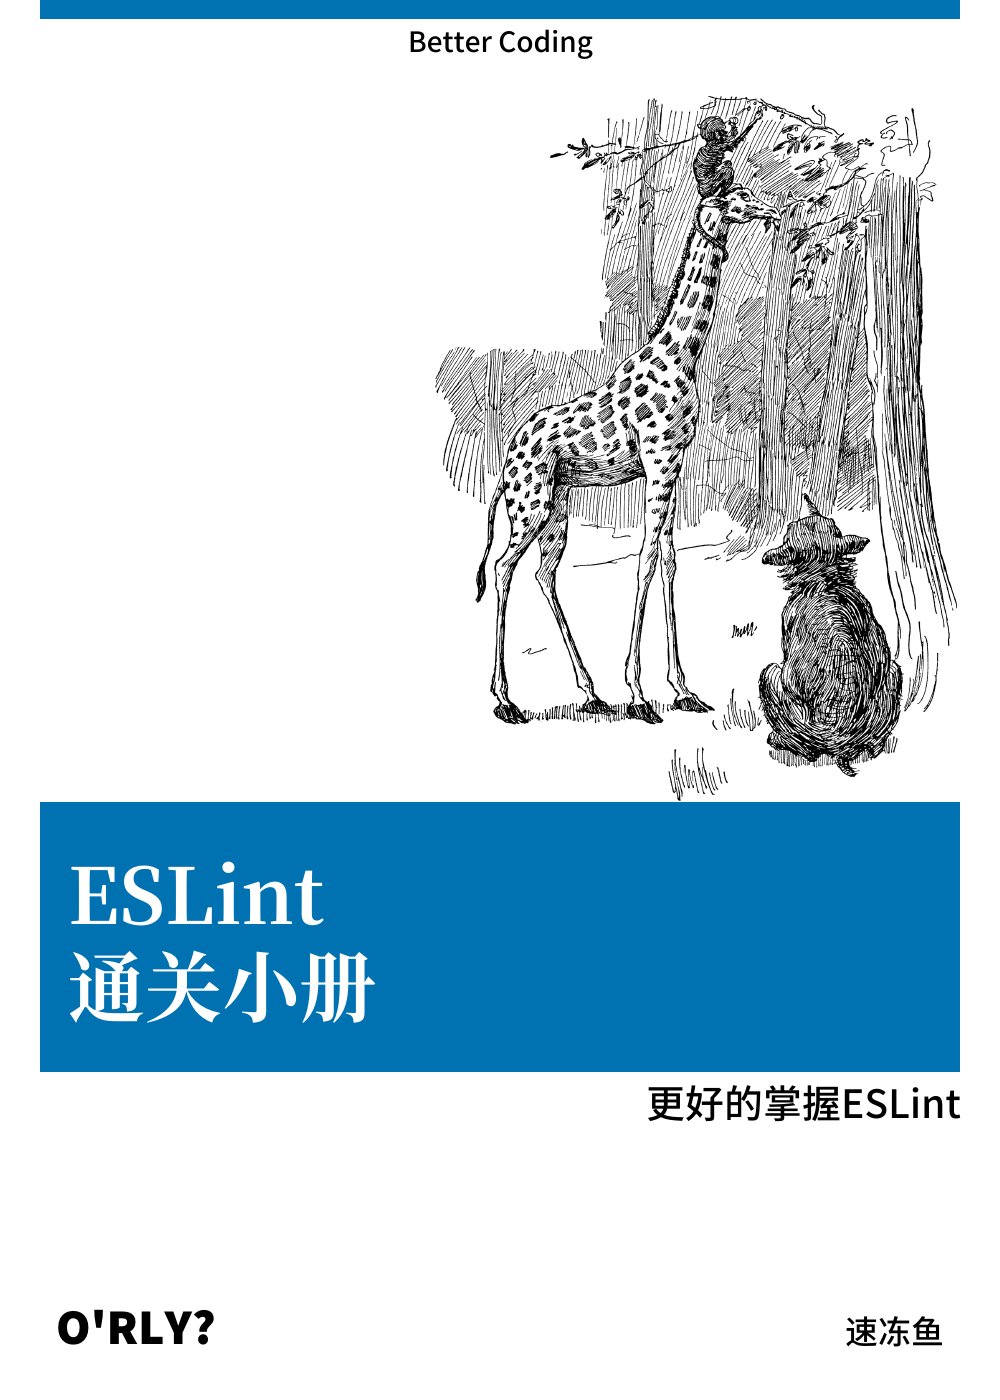 《ESLint通关小册》